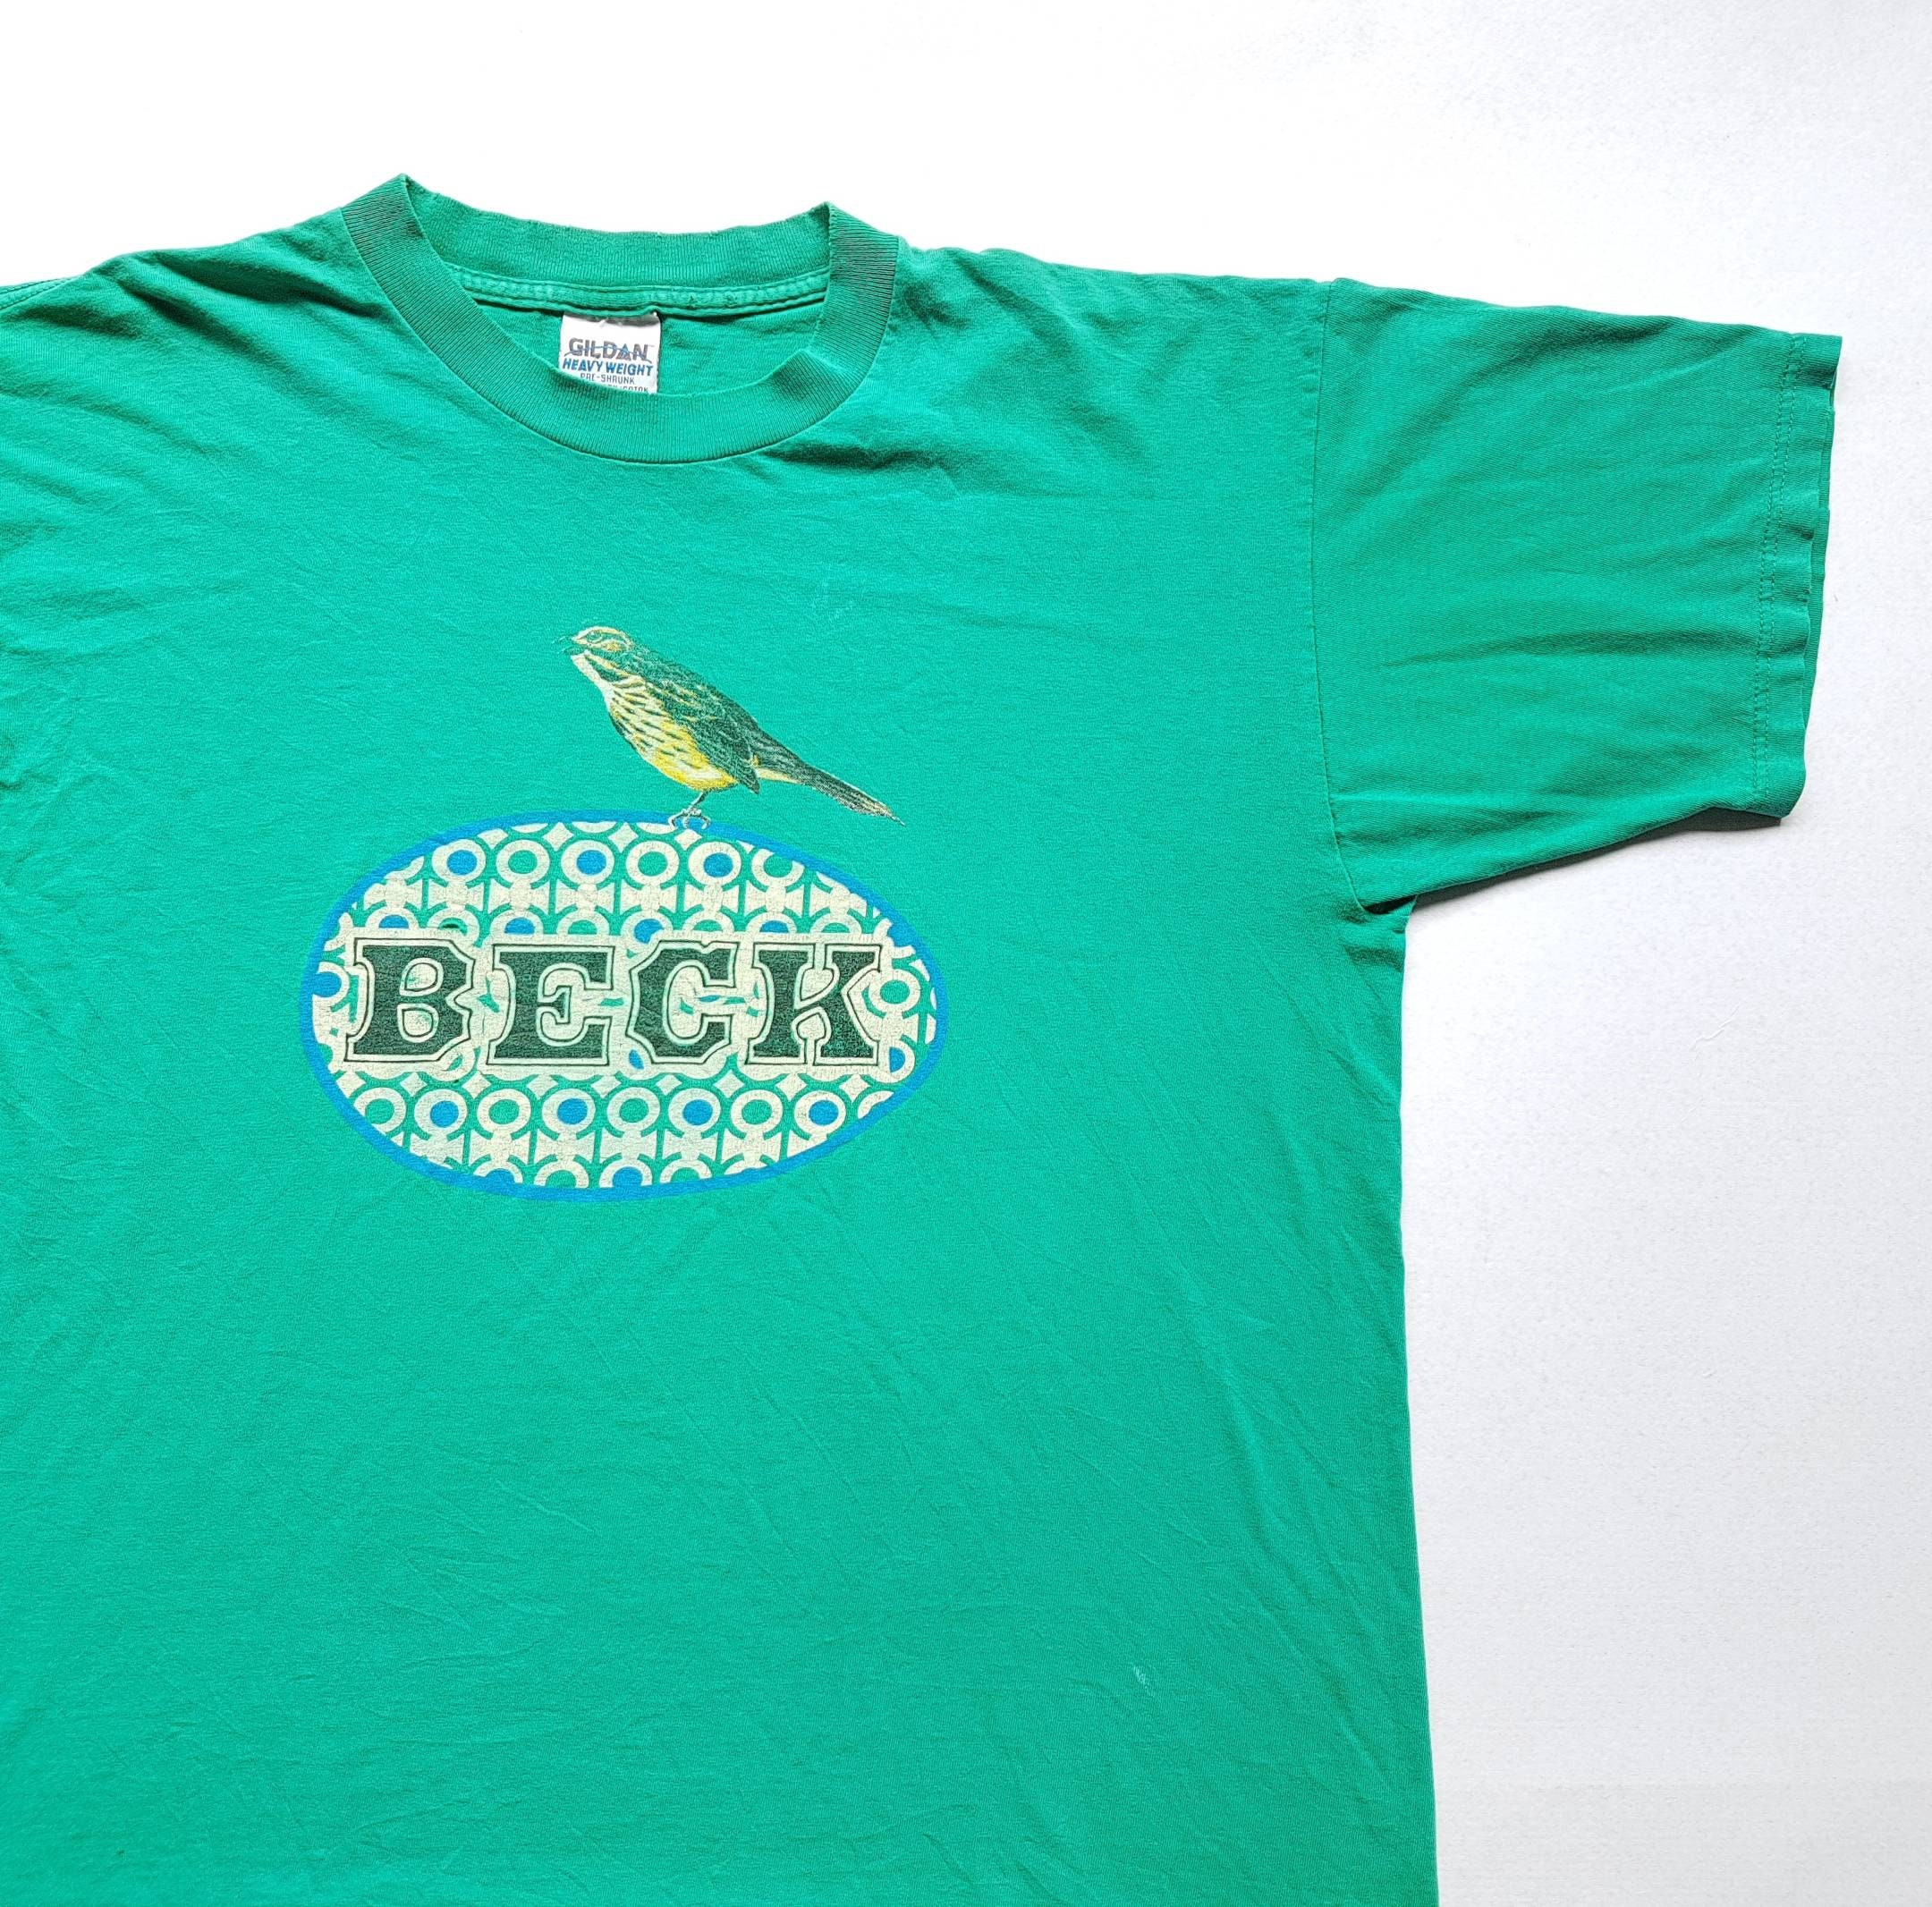 Vintage 90's Beck Odelay T Shirt size XL W 24 x L 28.5 - Etsy 日本